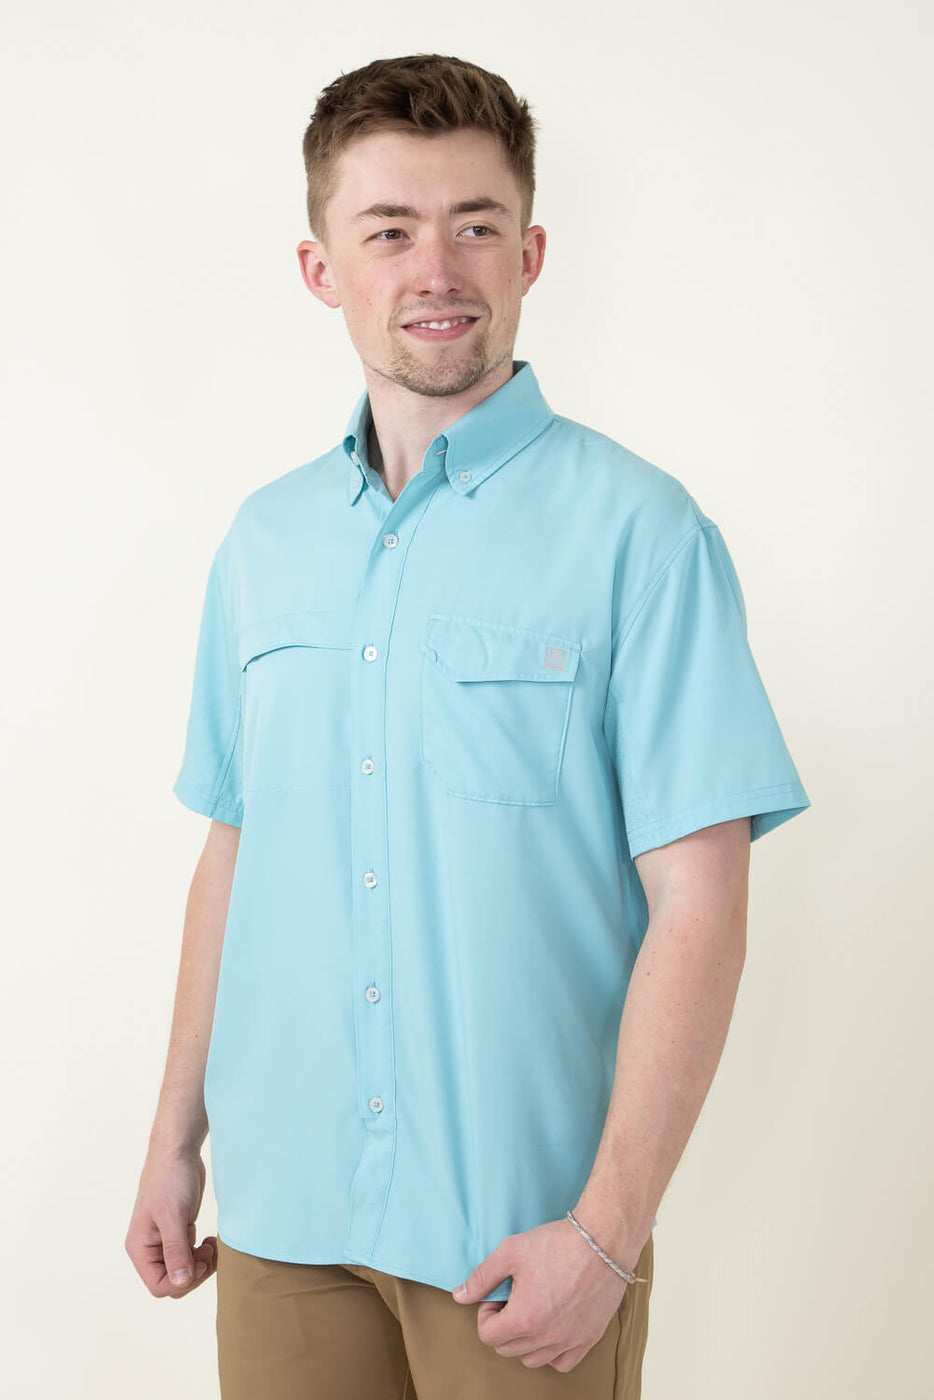 Huk Tide Point Button-Down Short-Sleeve Shirt, XL, Marine Blue